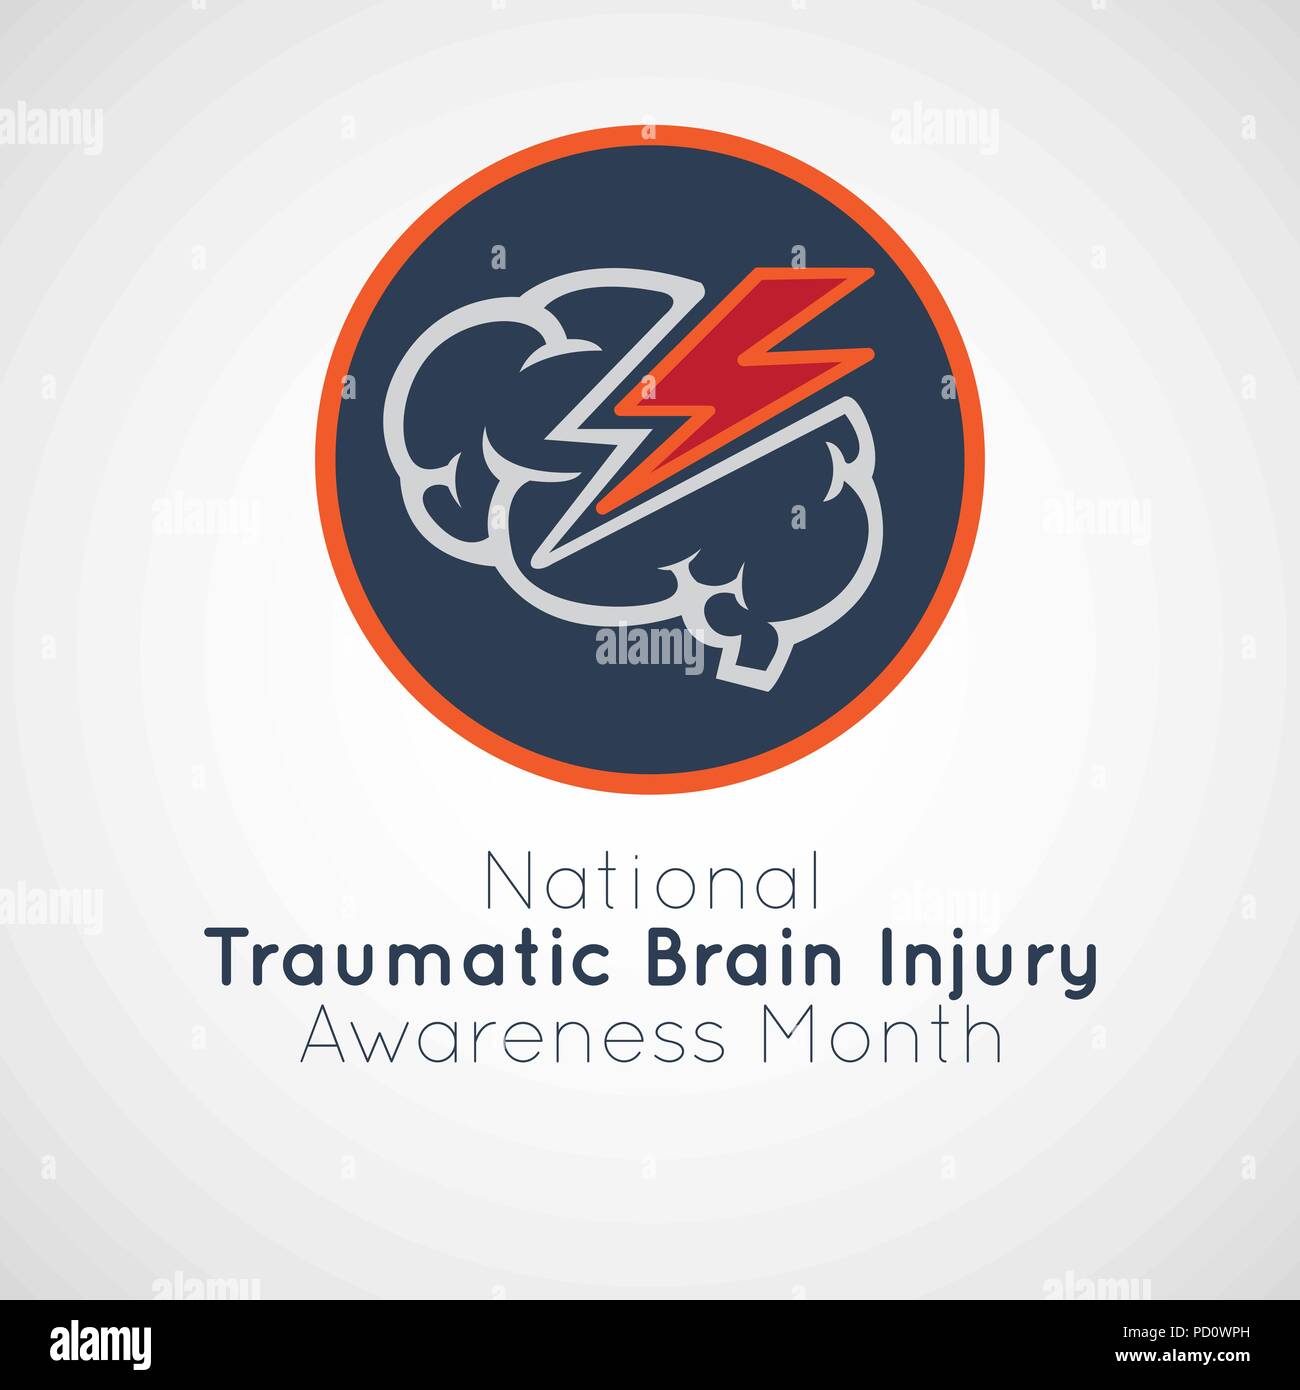 National Traumatic Brain Injury Awareness Month vector logo icon illustration Stock Vector